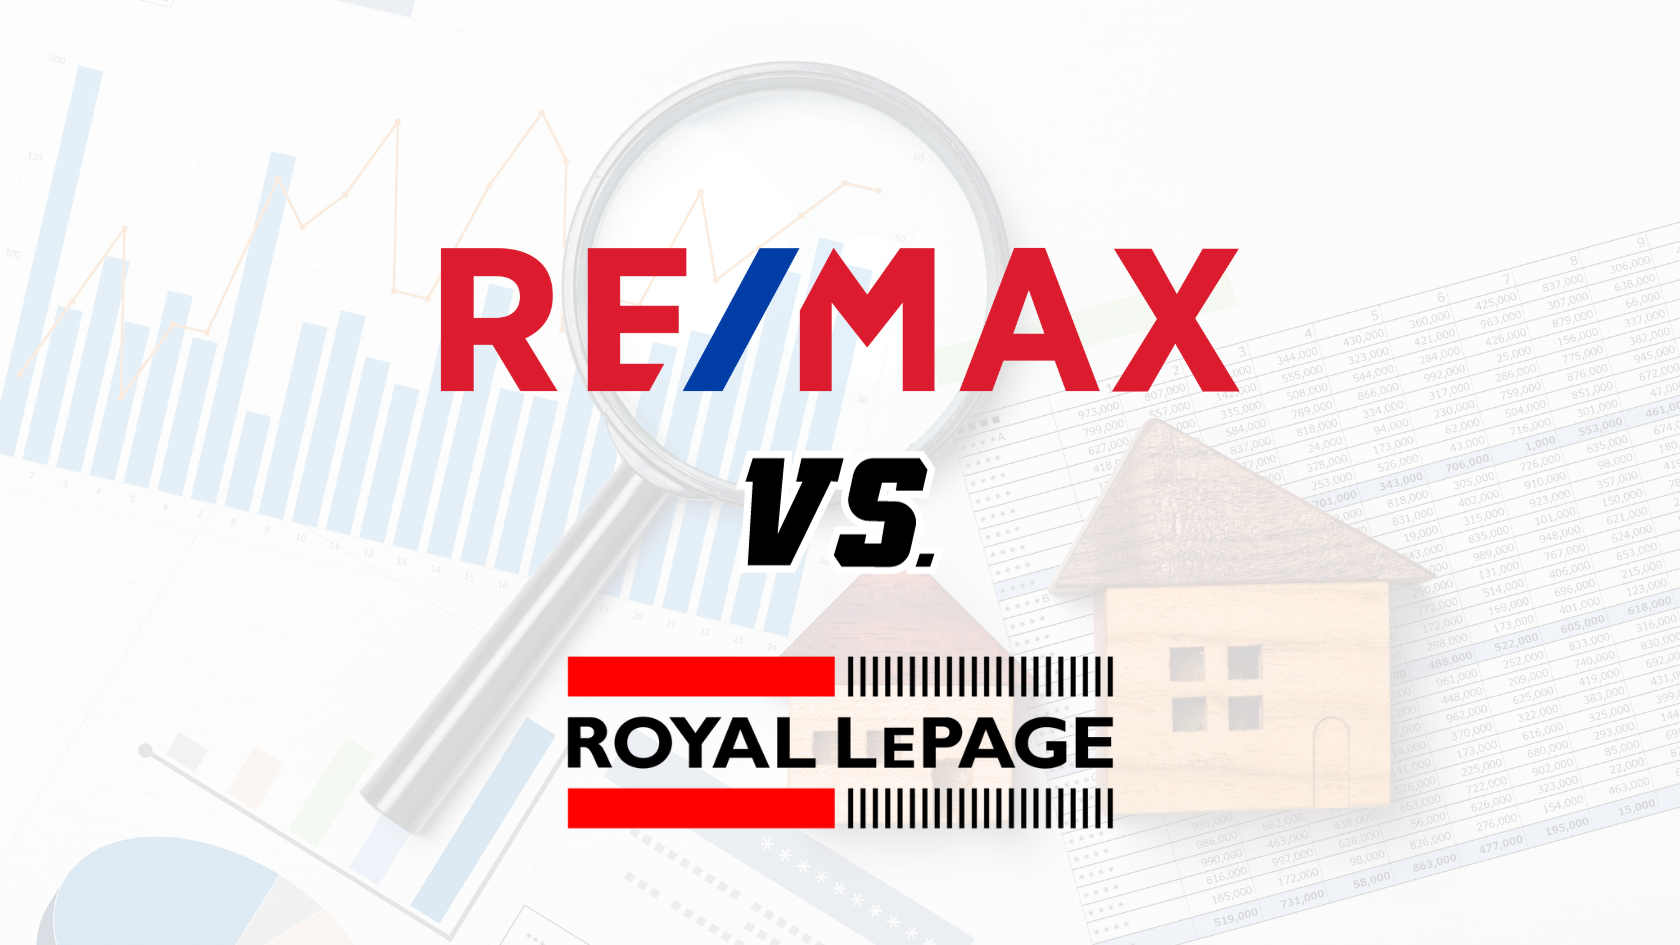 RE/MAX Vs. Royal LePage Market Forecast